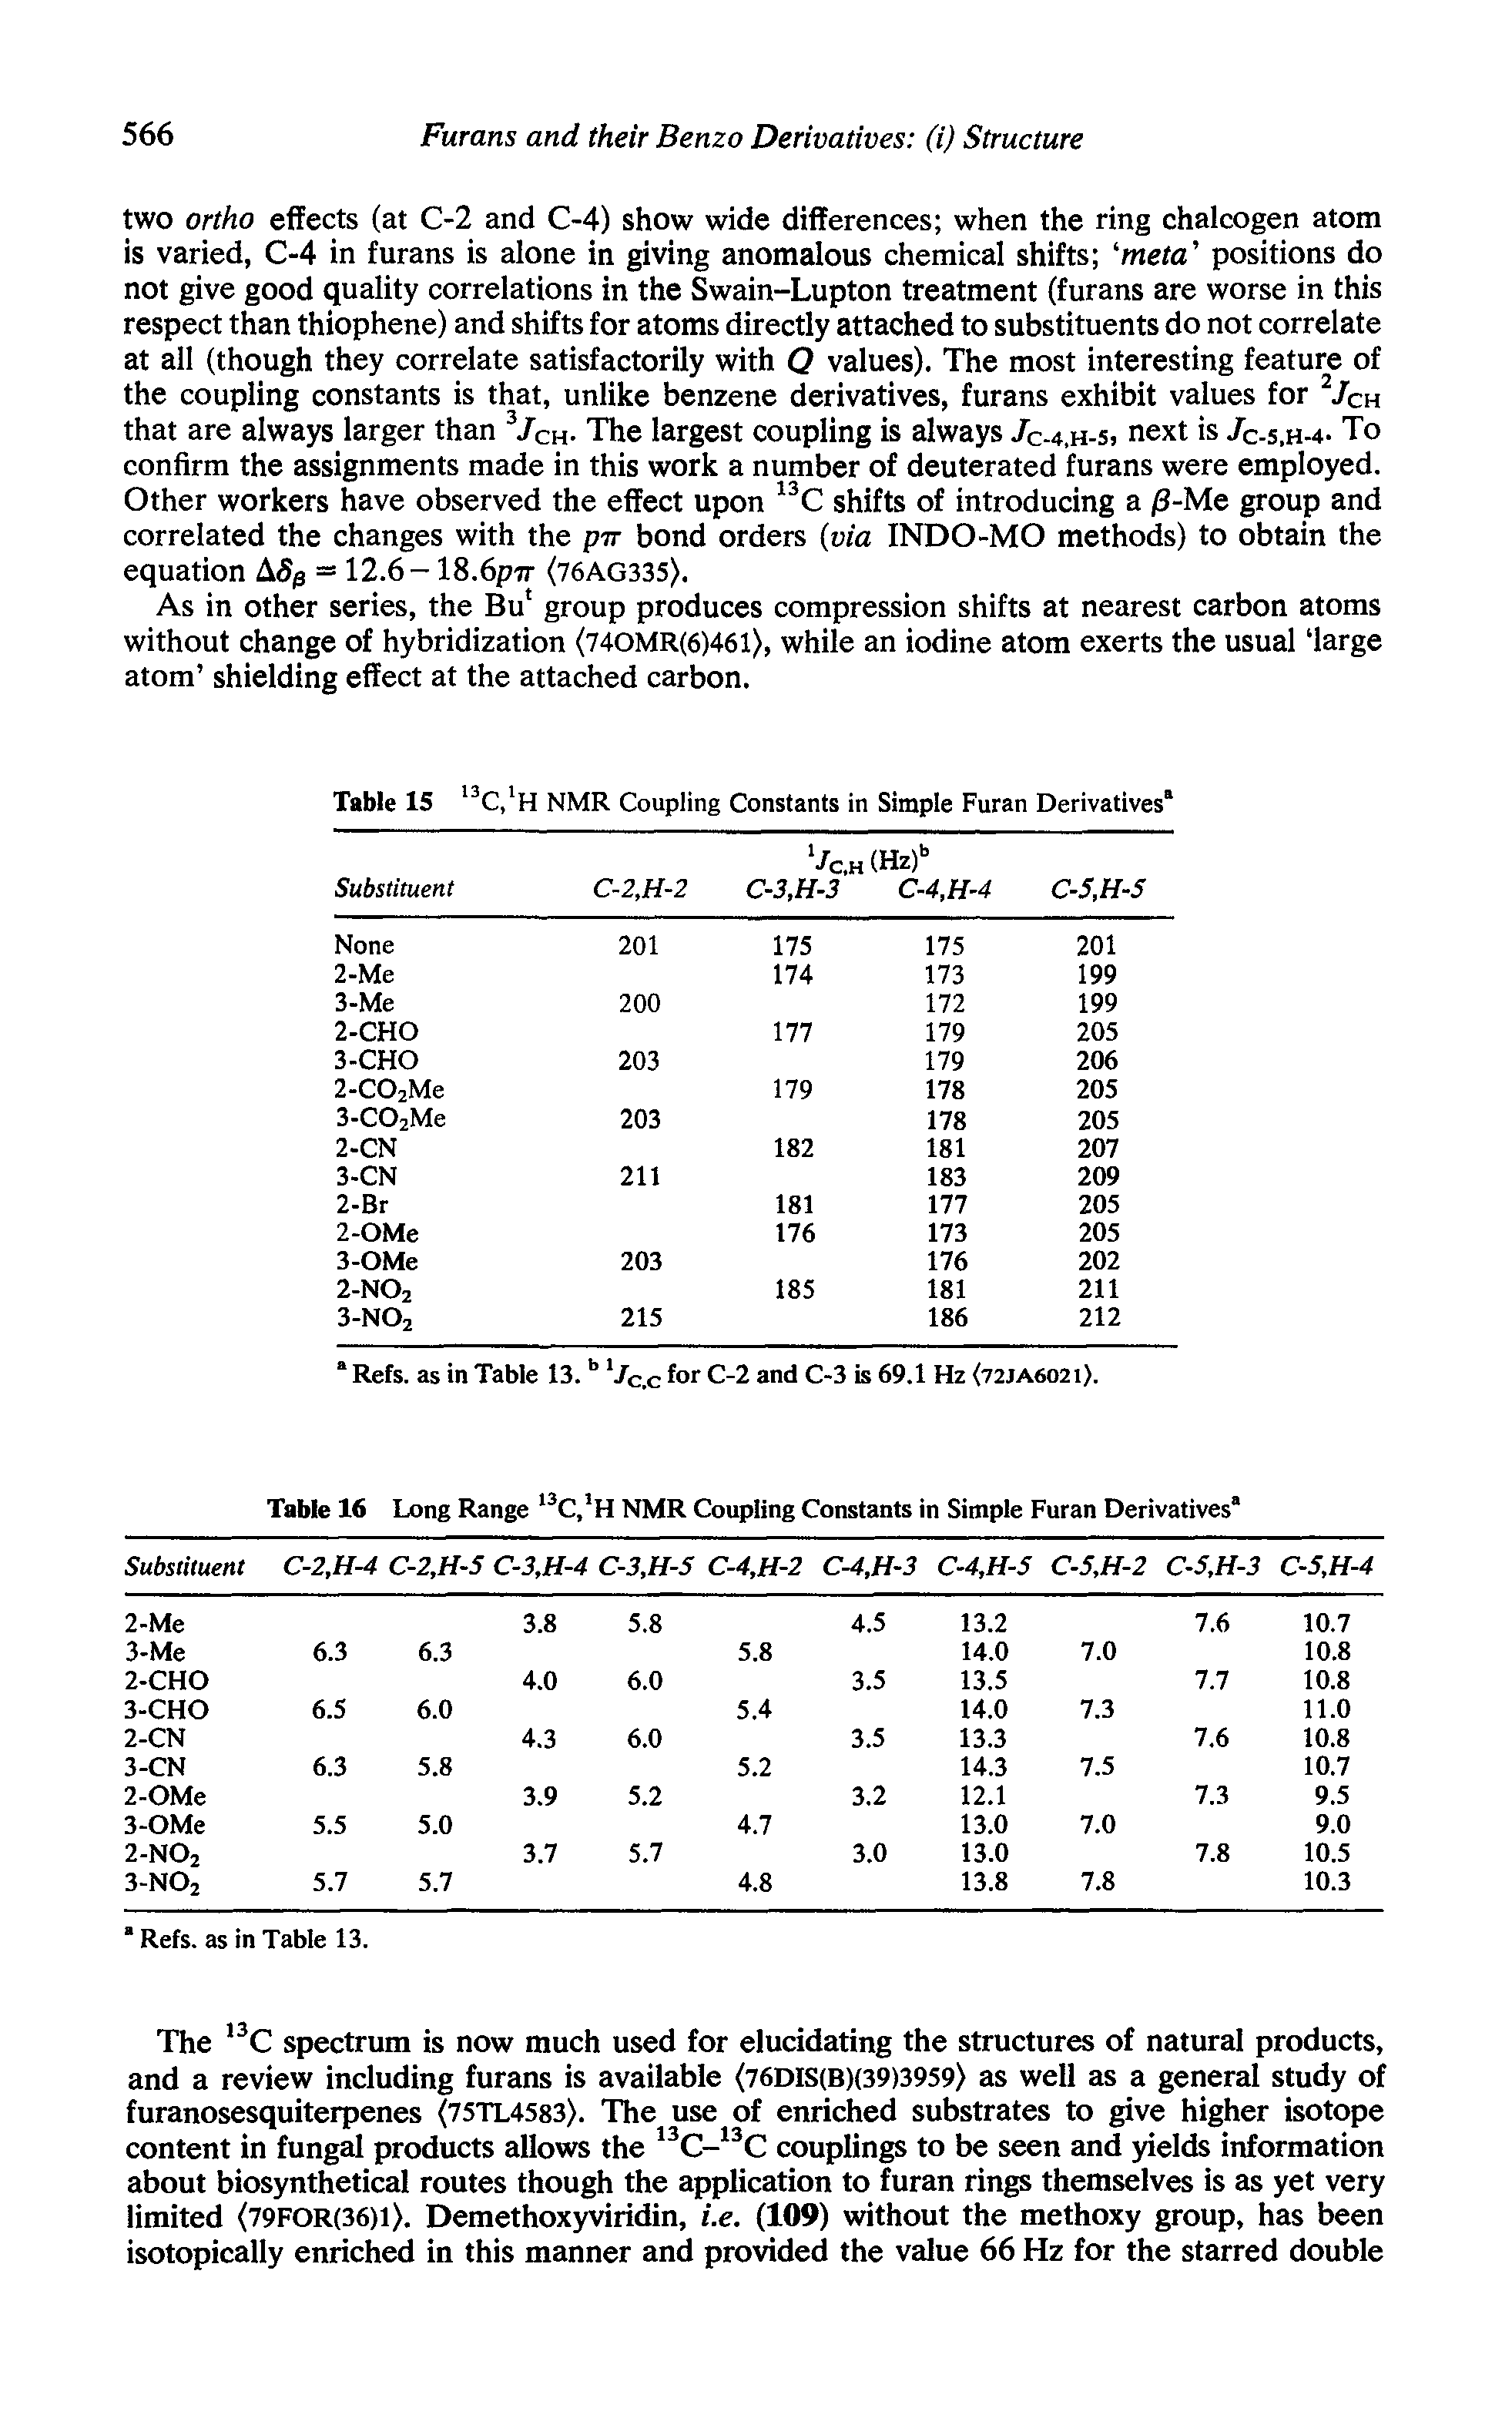 Table 16 Long Range 13C, H NMR Coupling Constants in Simple Furan Derivatives ...